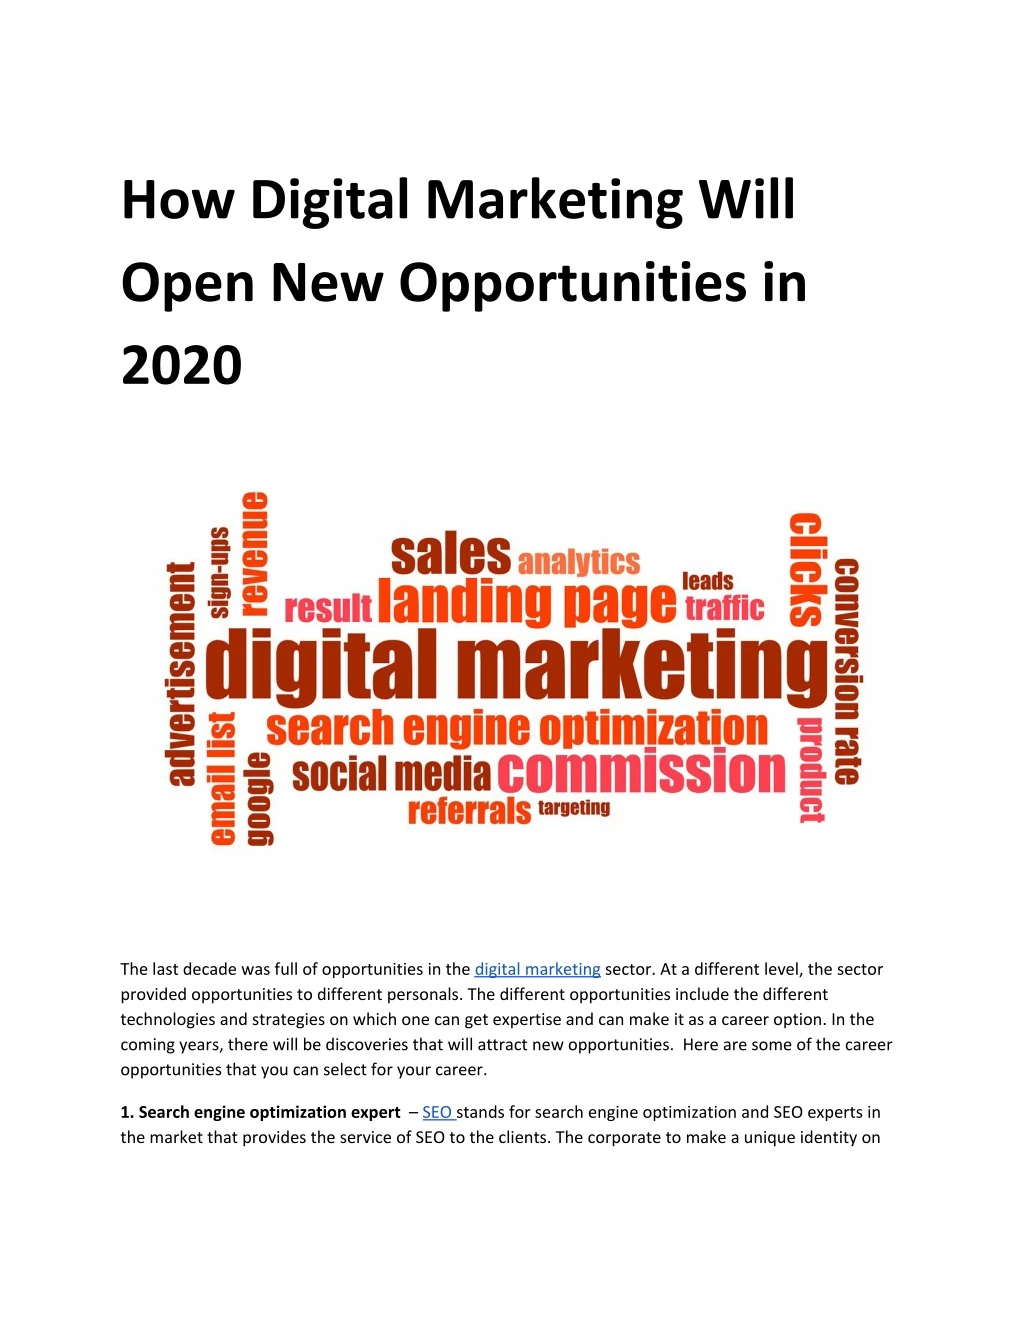 how digital marketing will open new opportunities